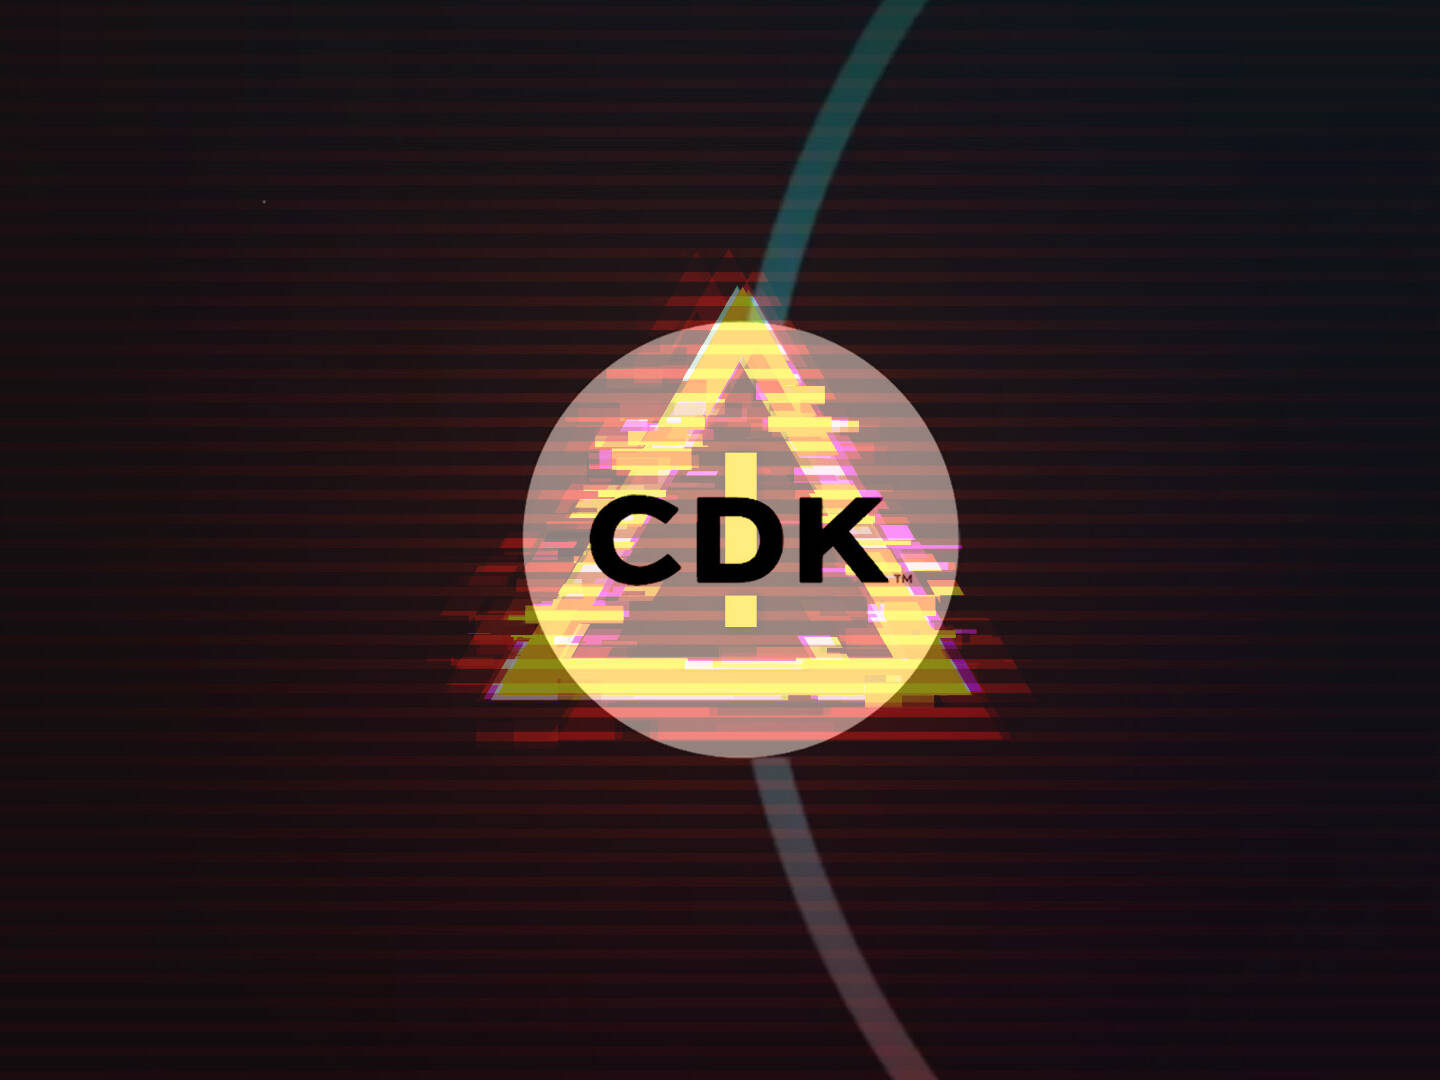 CDK Global hacked logo